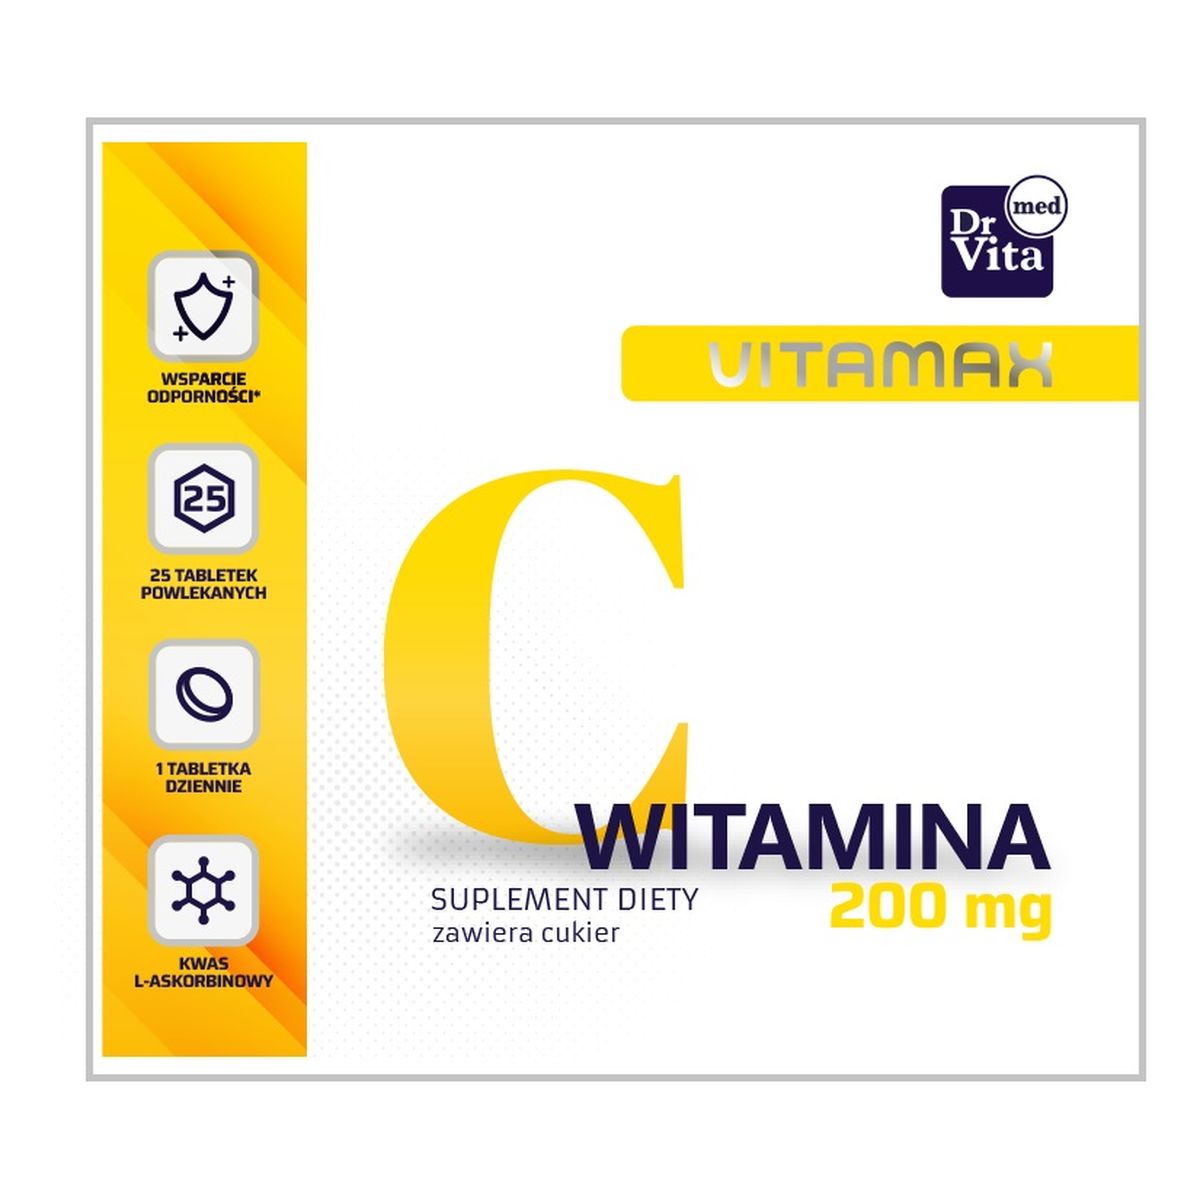 Dr Vita Vitamax witamina c 200 mg suplement diety 25 tabletek powlekanych